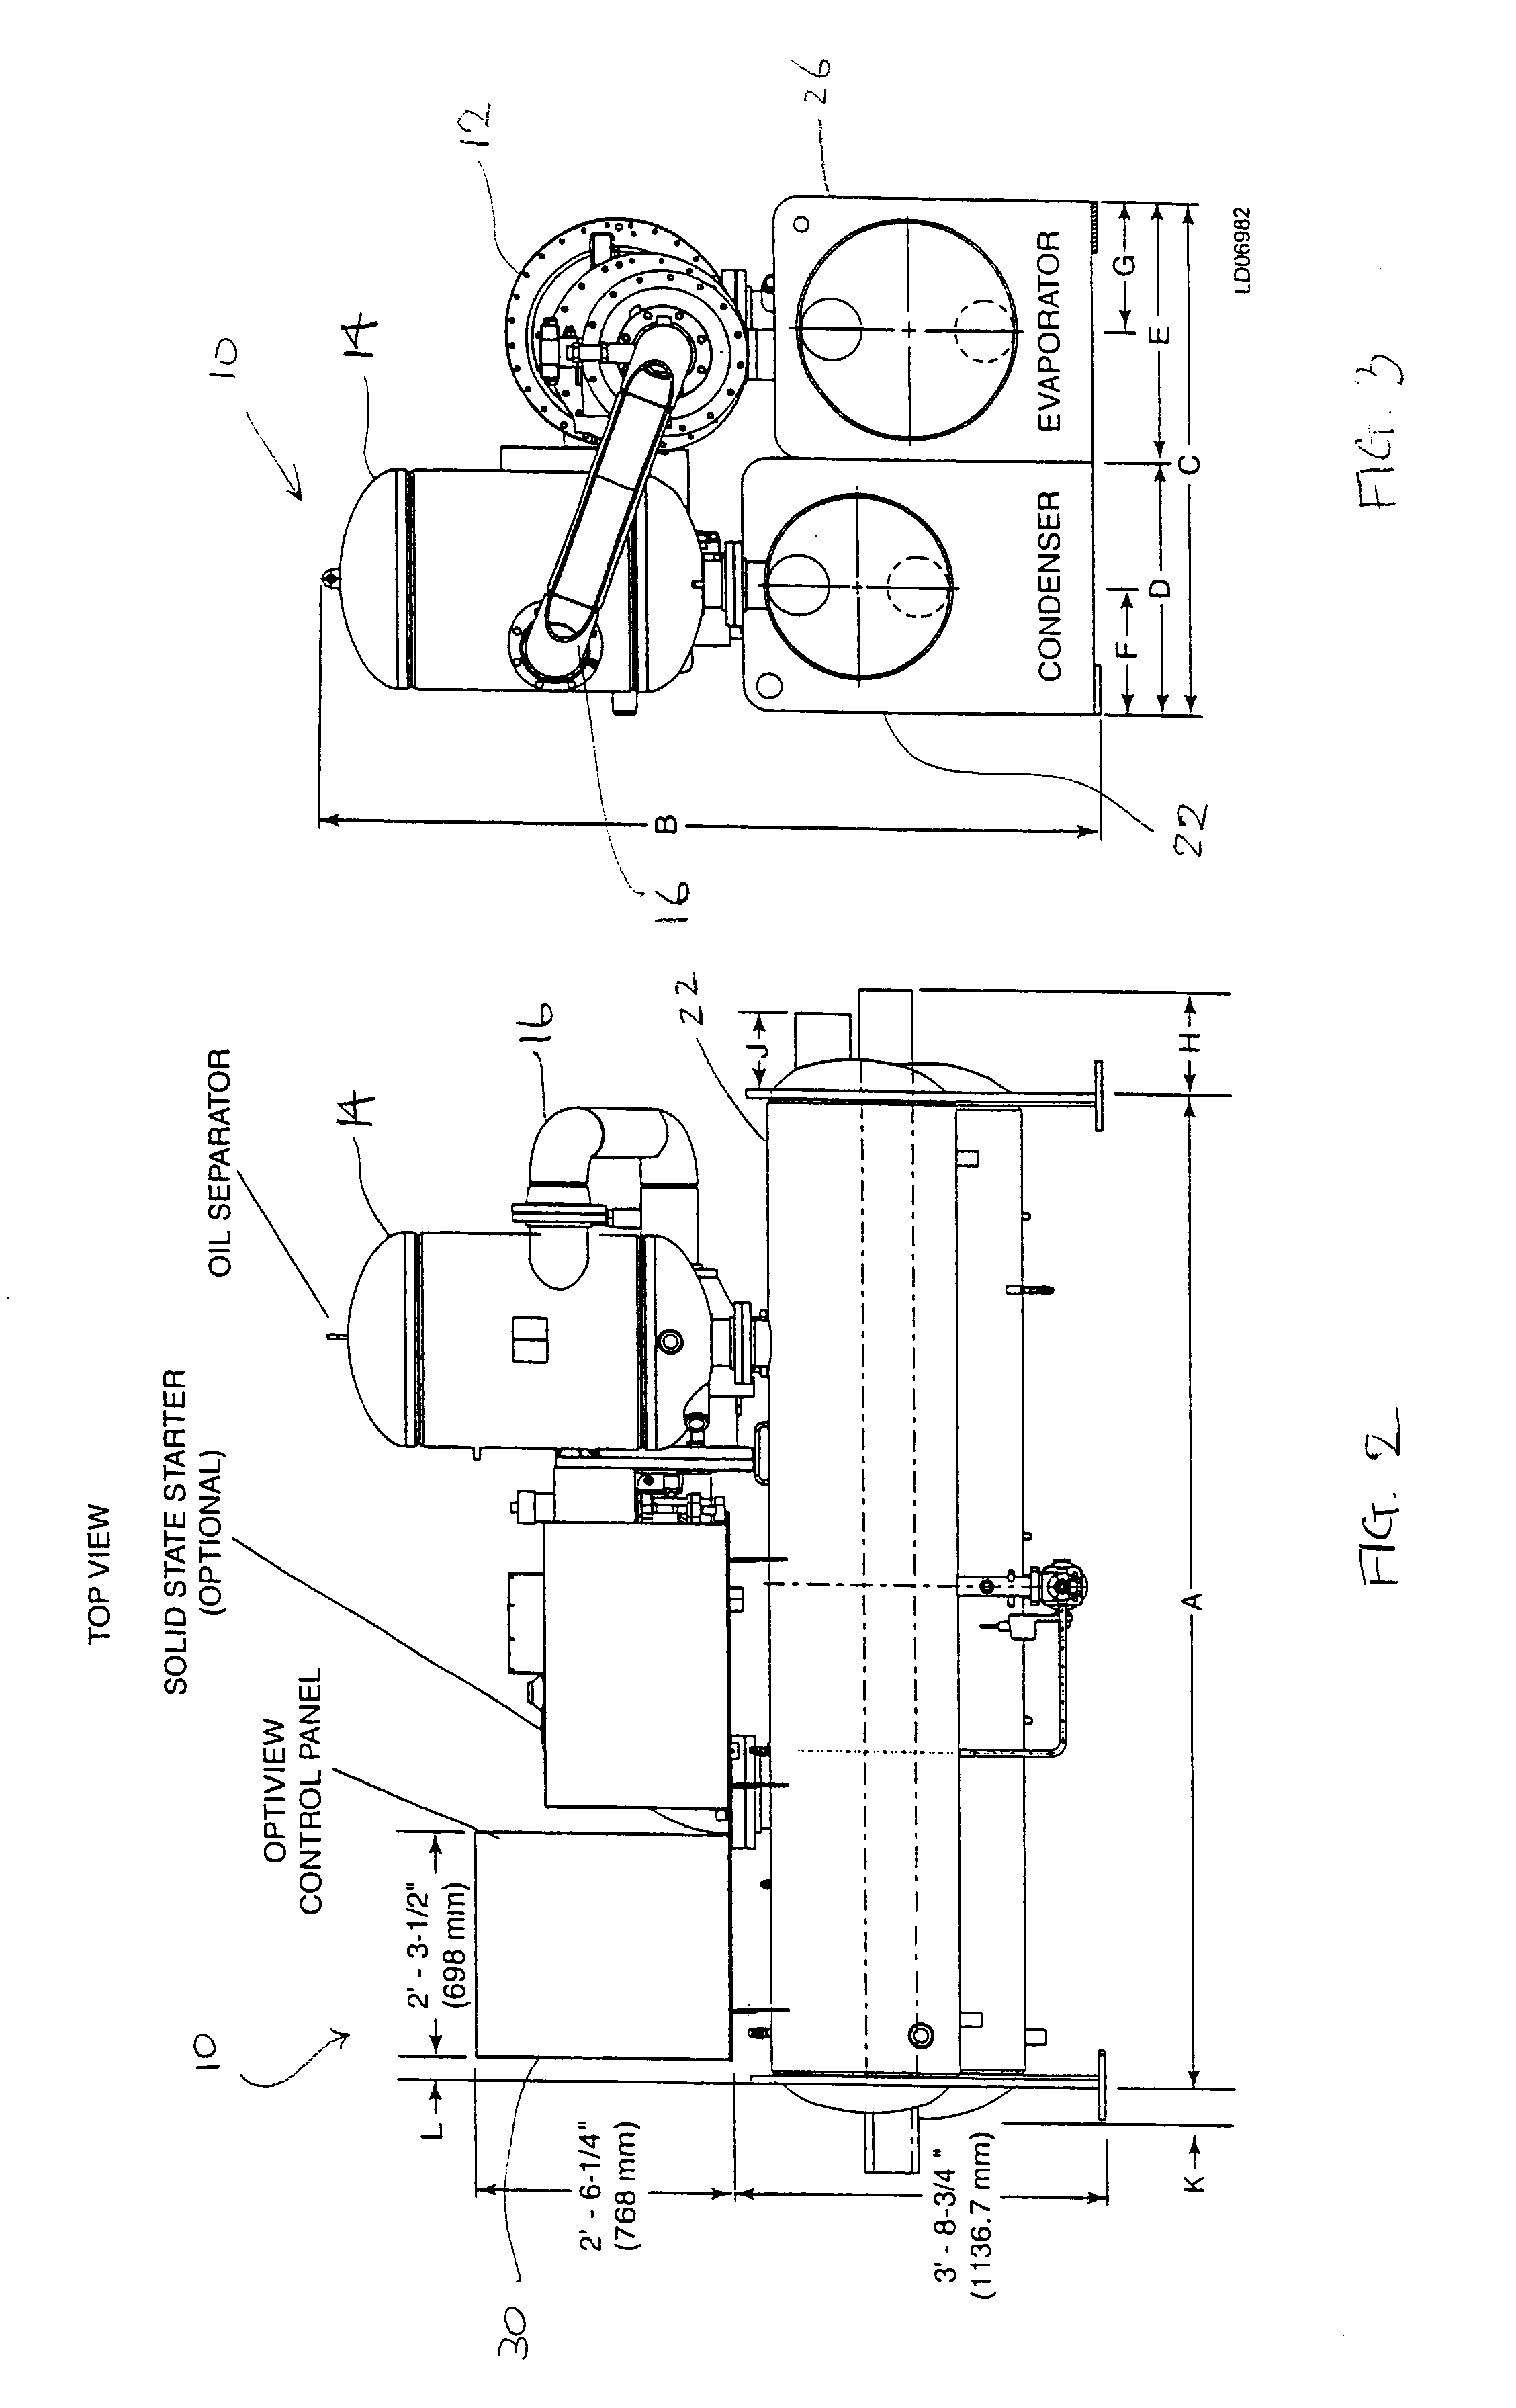 Vertical oil separator for a chiller system